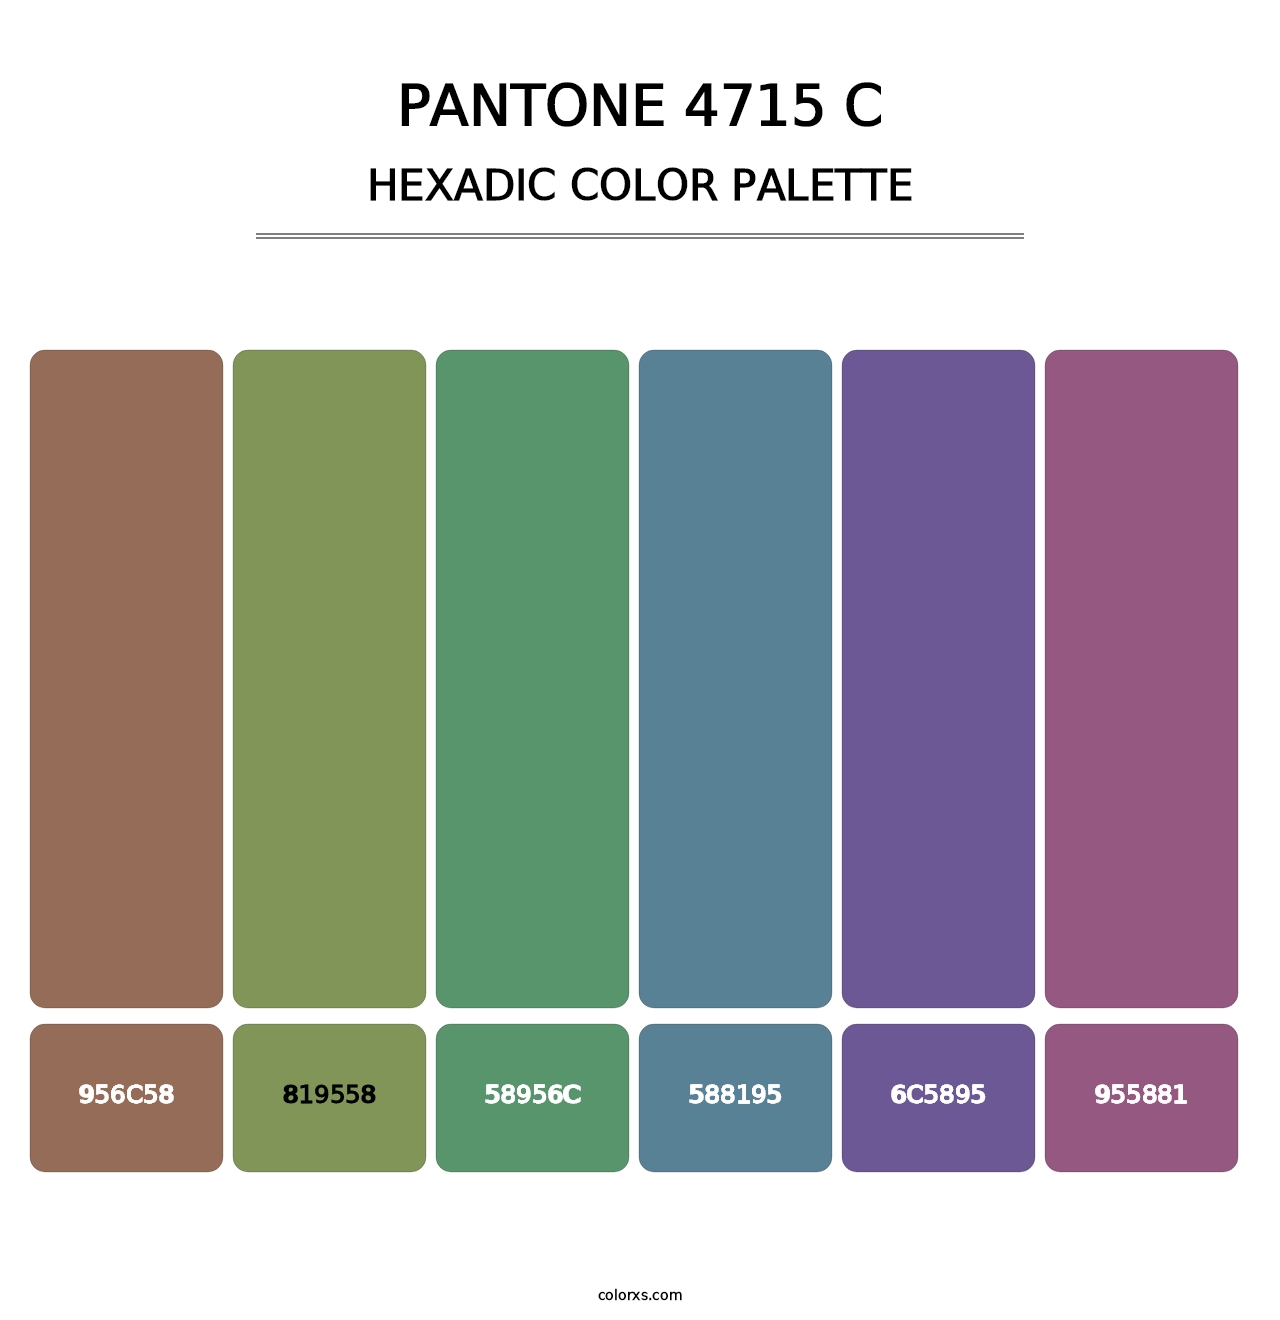 PANTONE 4715 C - Hexadic Color Palette